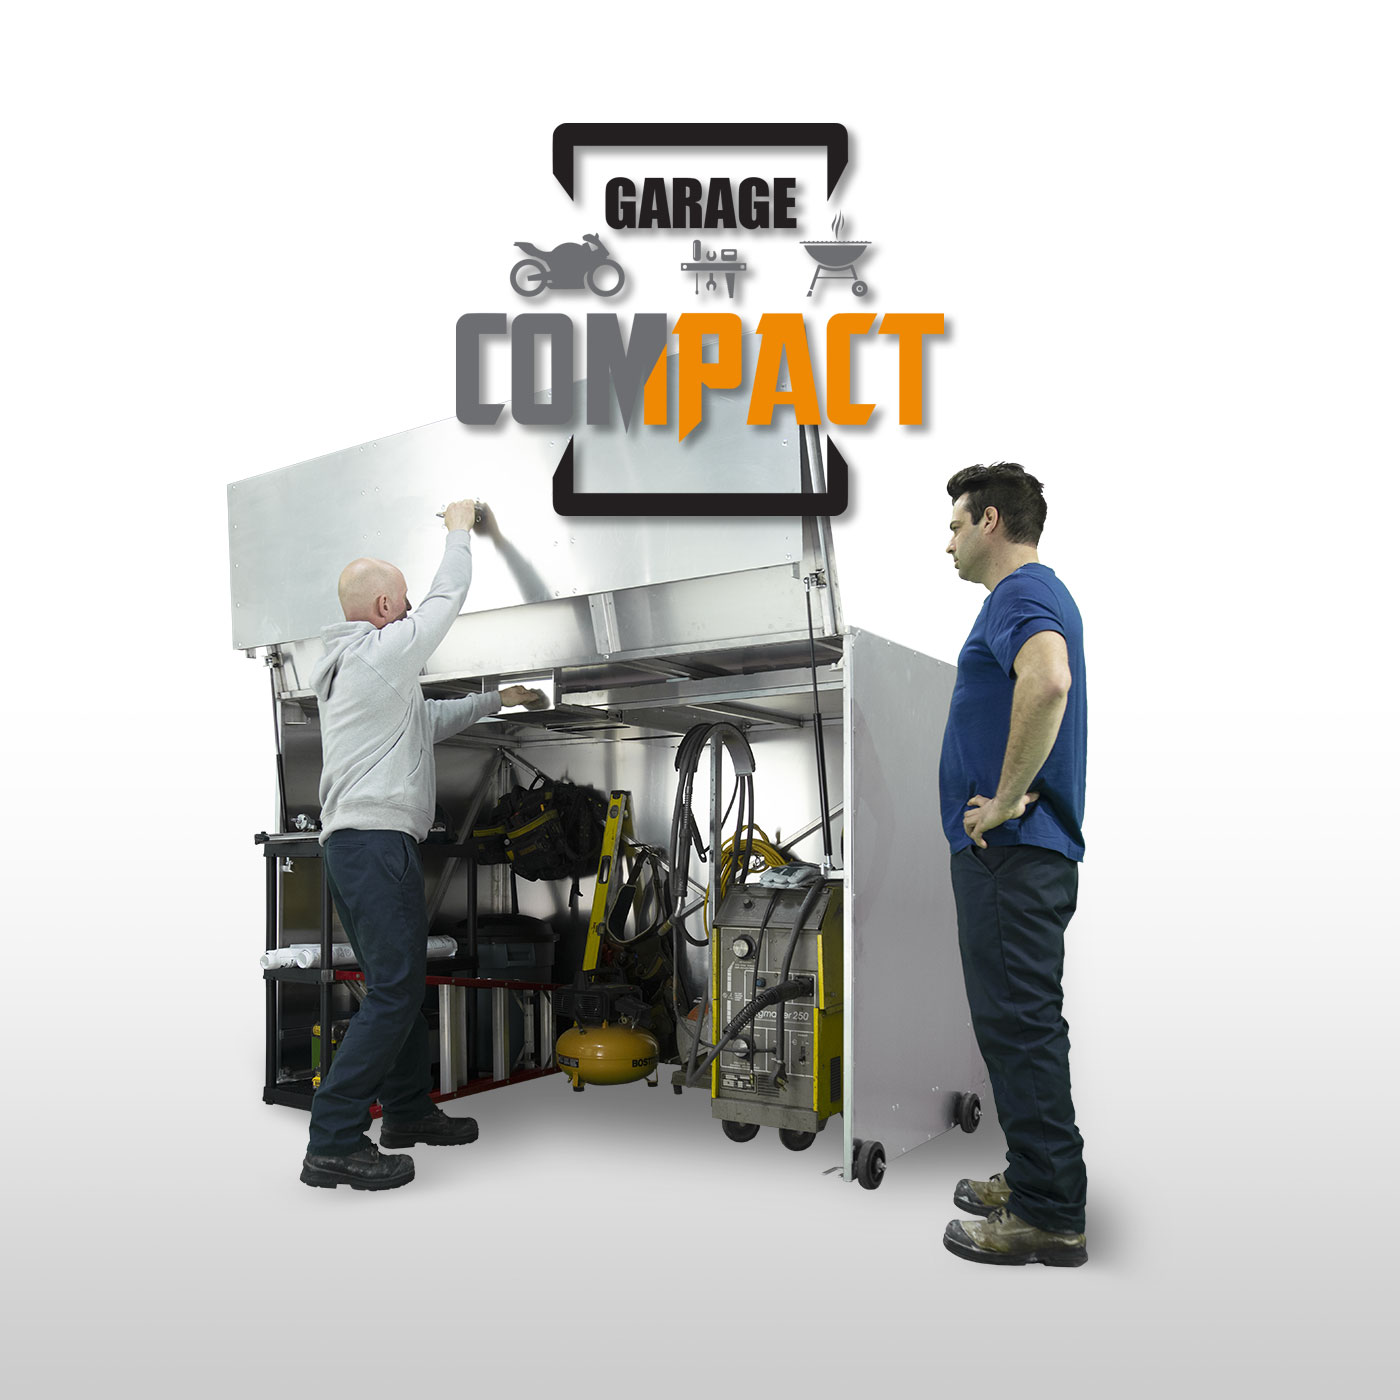 Garage compact – Site Web